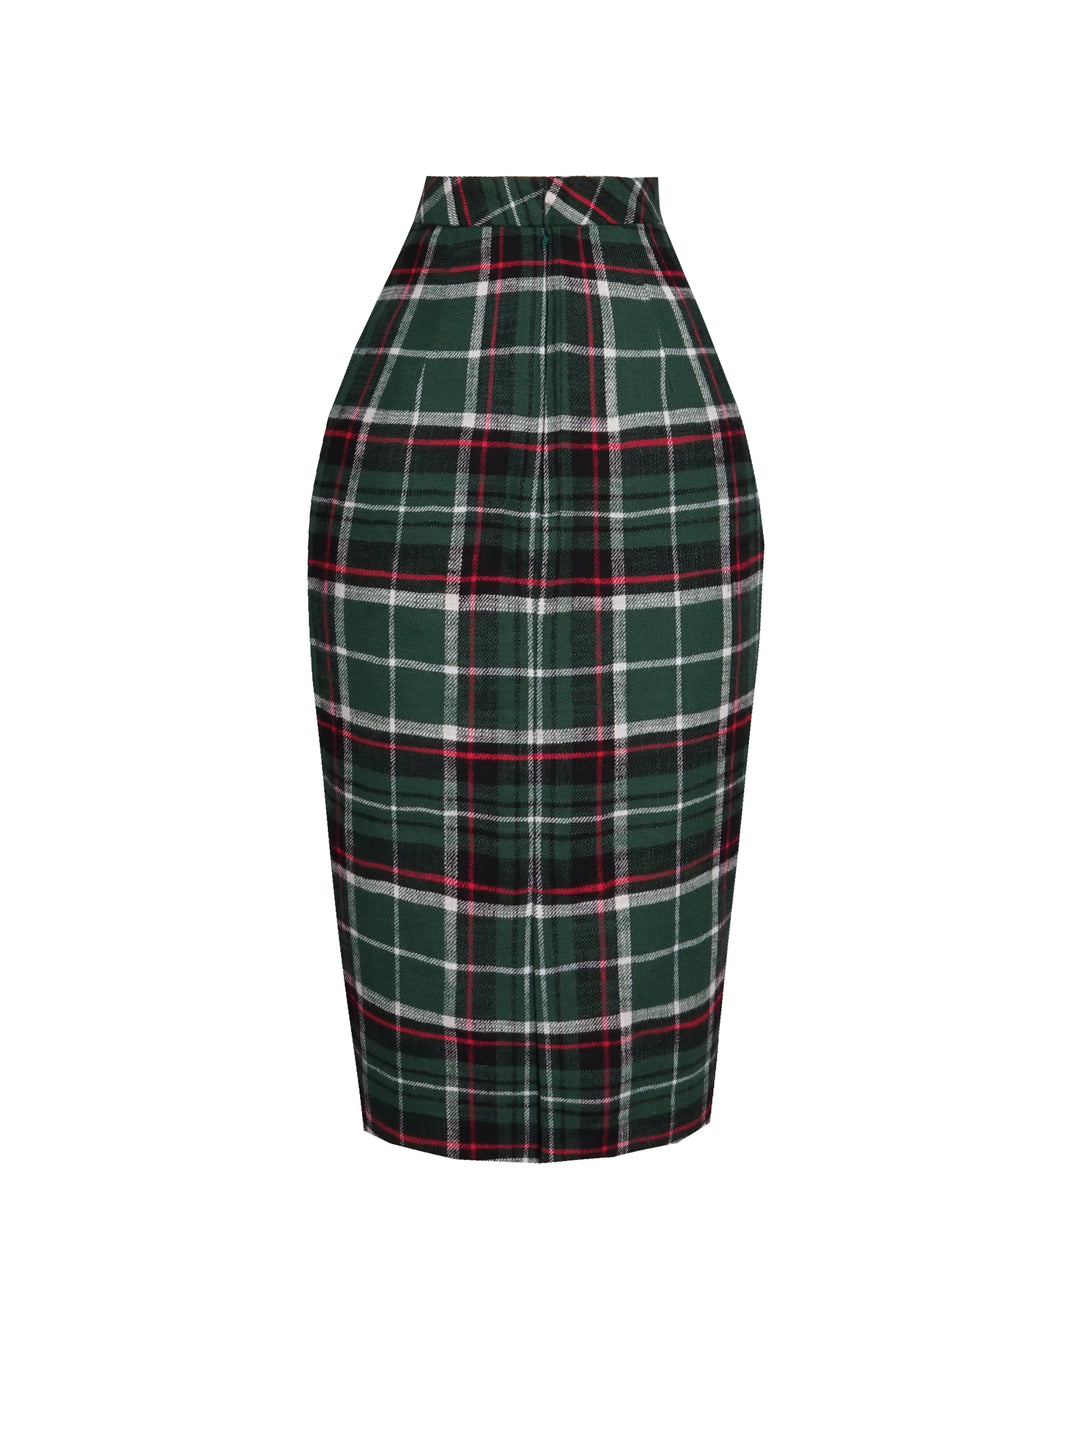 MTO - Denham Skirt in "Norwich Plaid"